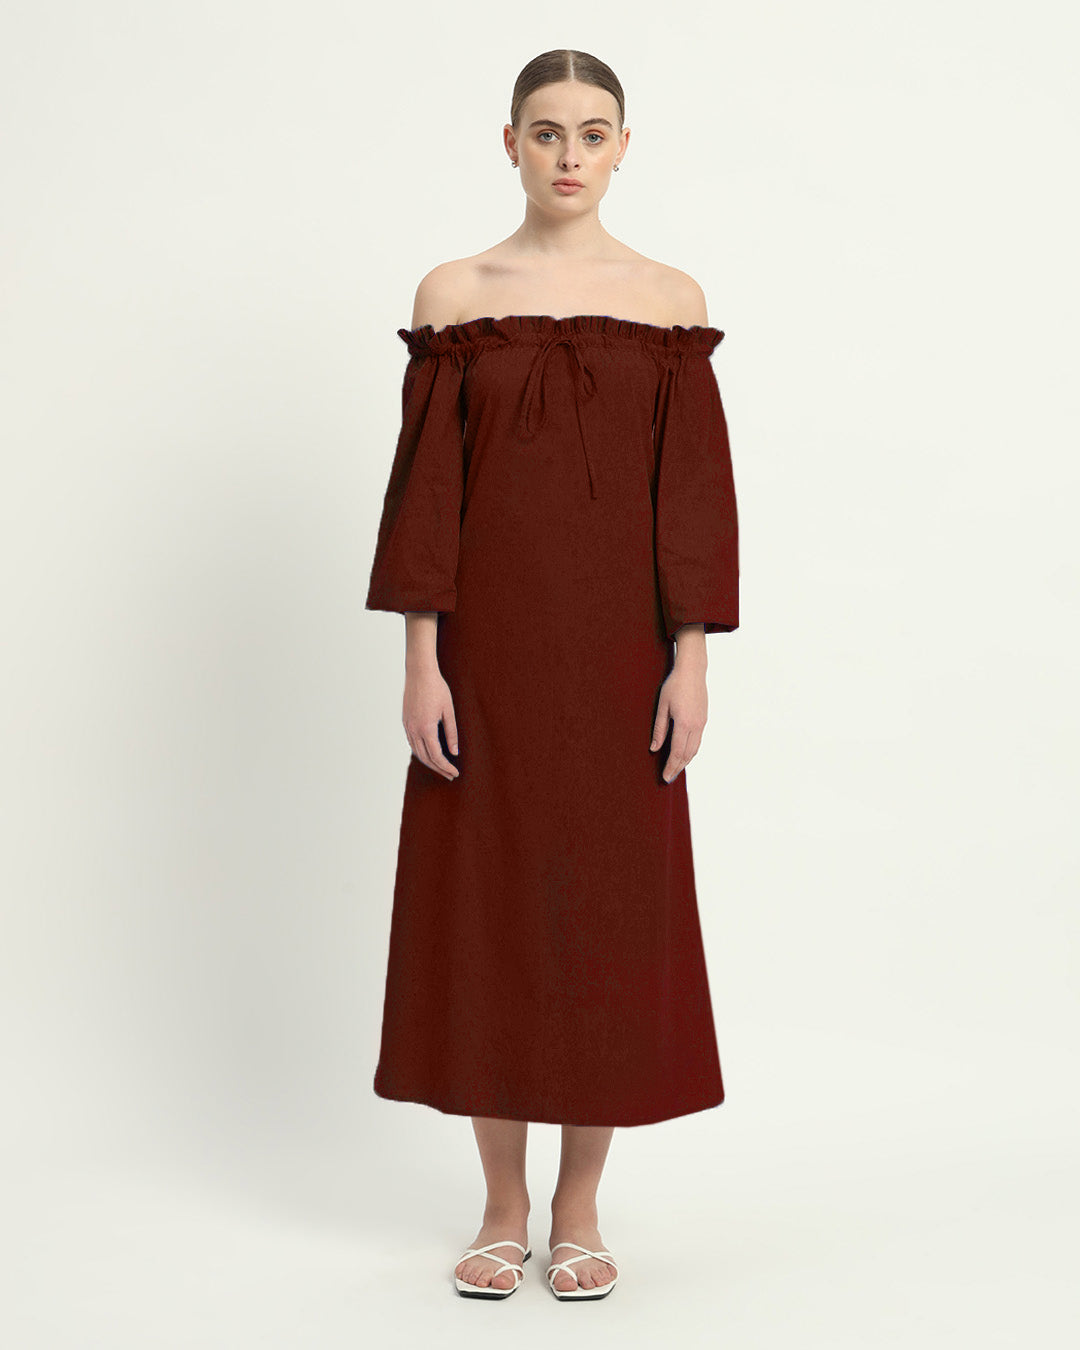 The Rouge Carlisle Cotton Dress